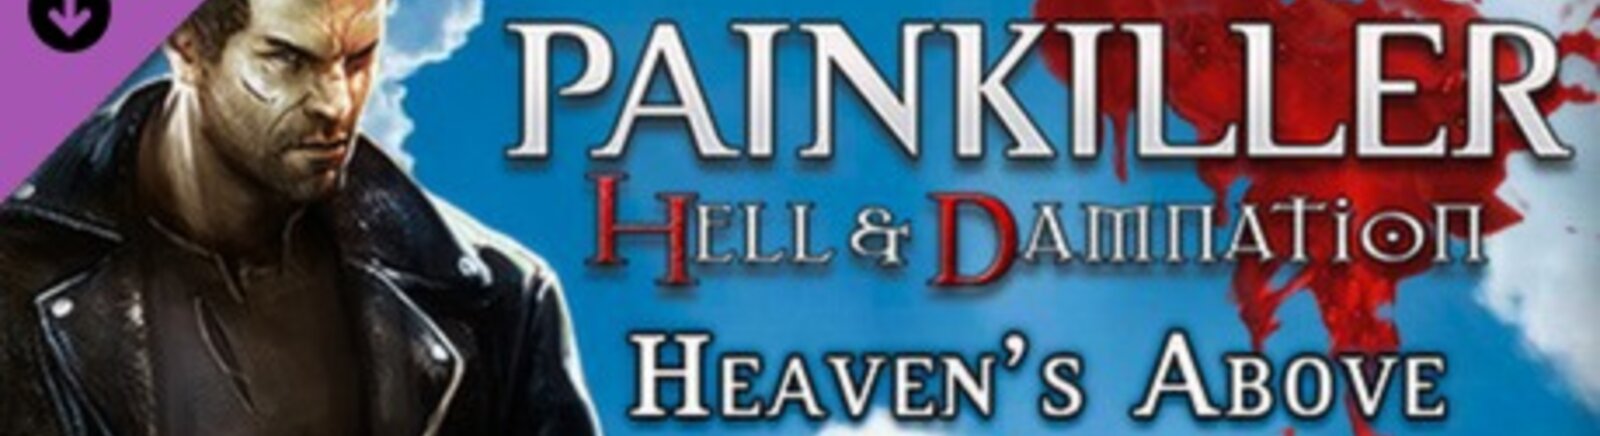 Дата выхода Painkiller: Hell & Damnation - Heaven's Above (Heaven's Above)  на PC в России и во всем мире